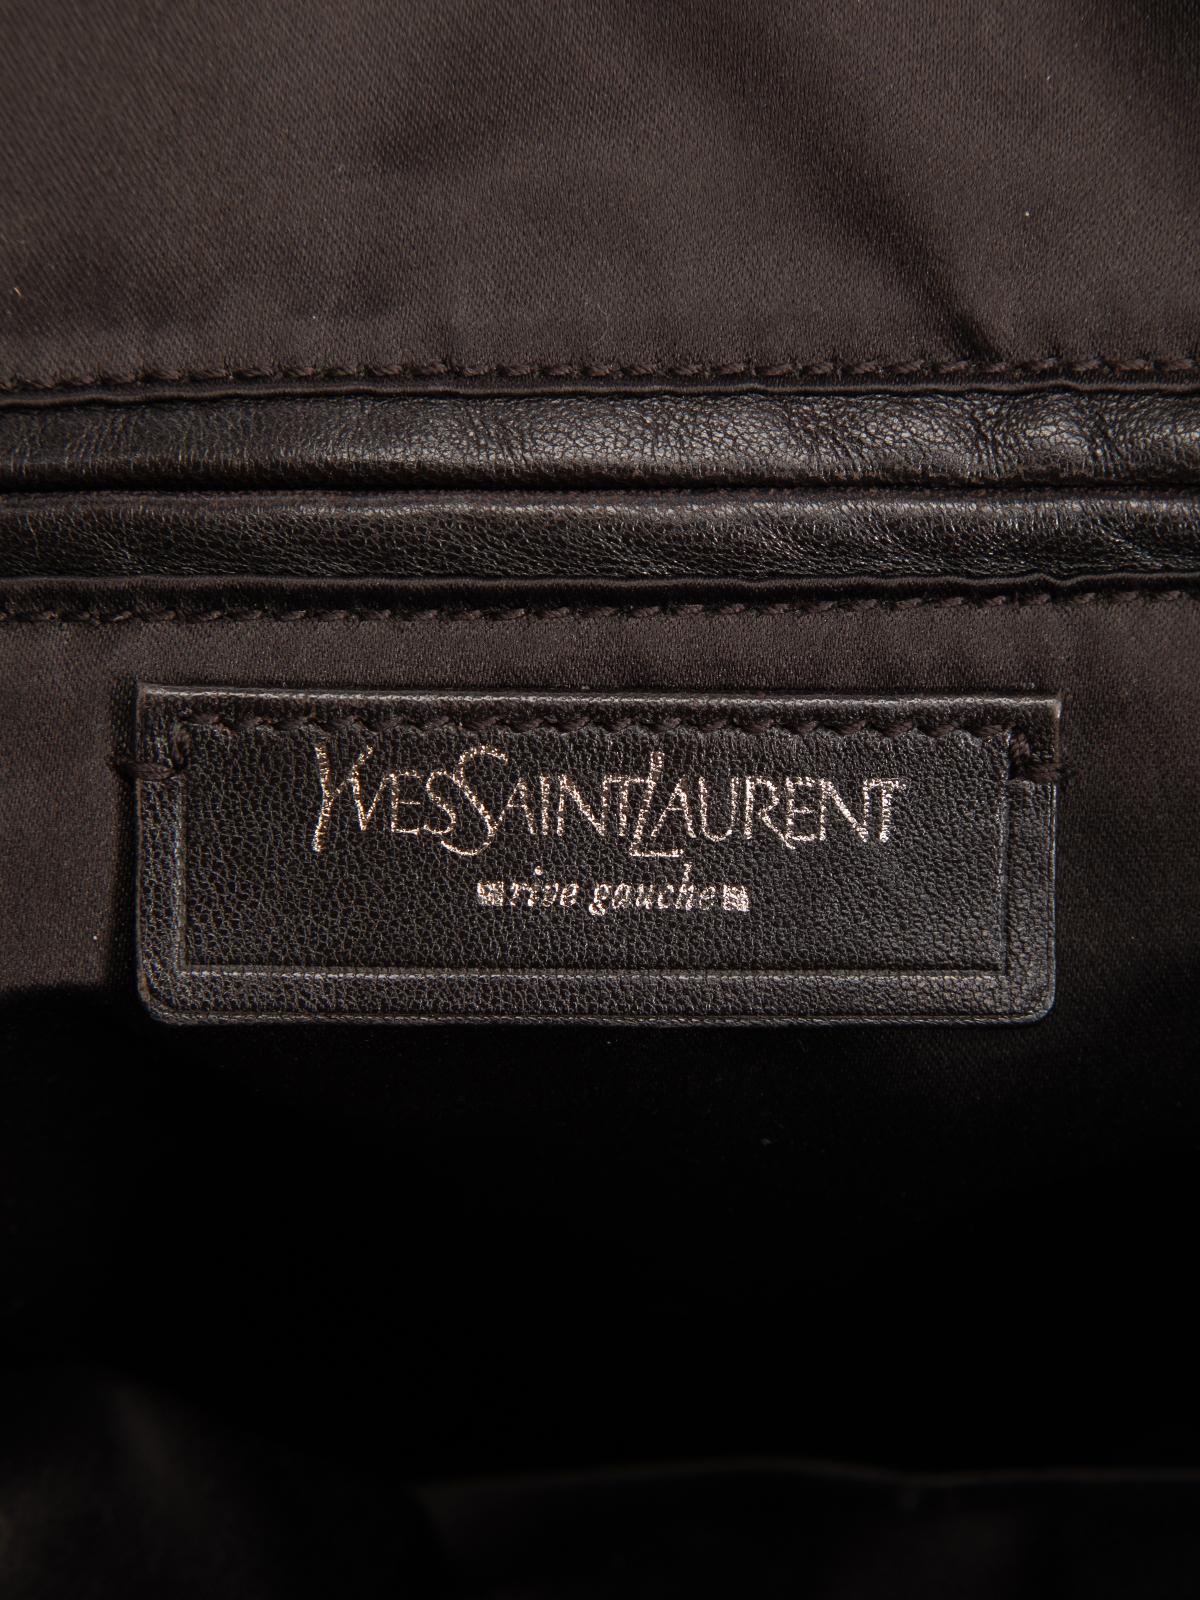 Saint Laurent Women's Yves Saint Laurent Brown Leather Muse Tote Bag For Sale 5